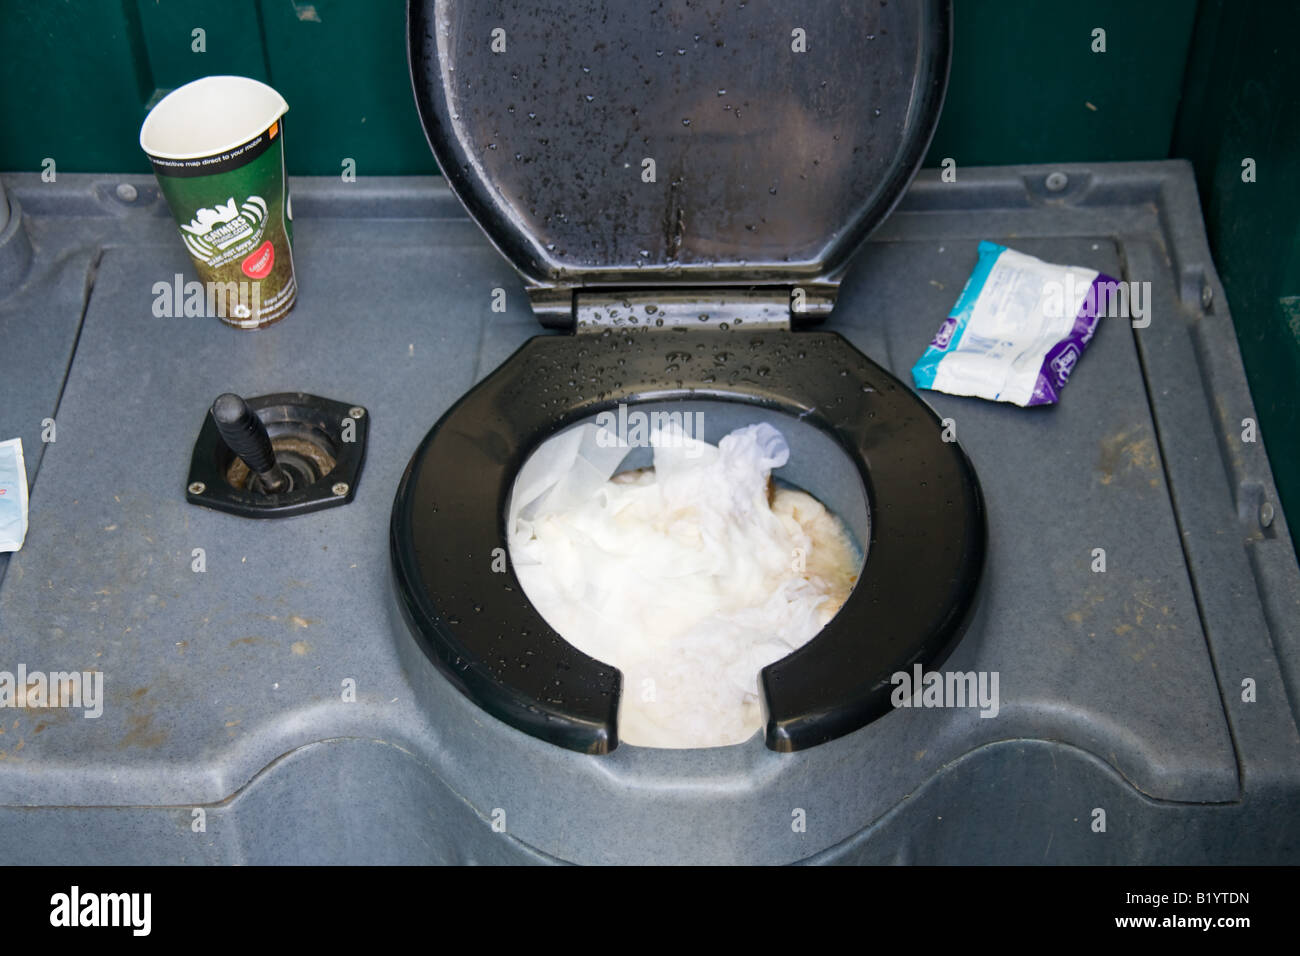 Glastonbury festival toilette -Fotos und -Bildmaterial in hoher Auflösung –  Alamy